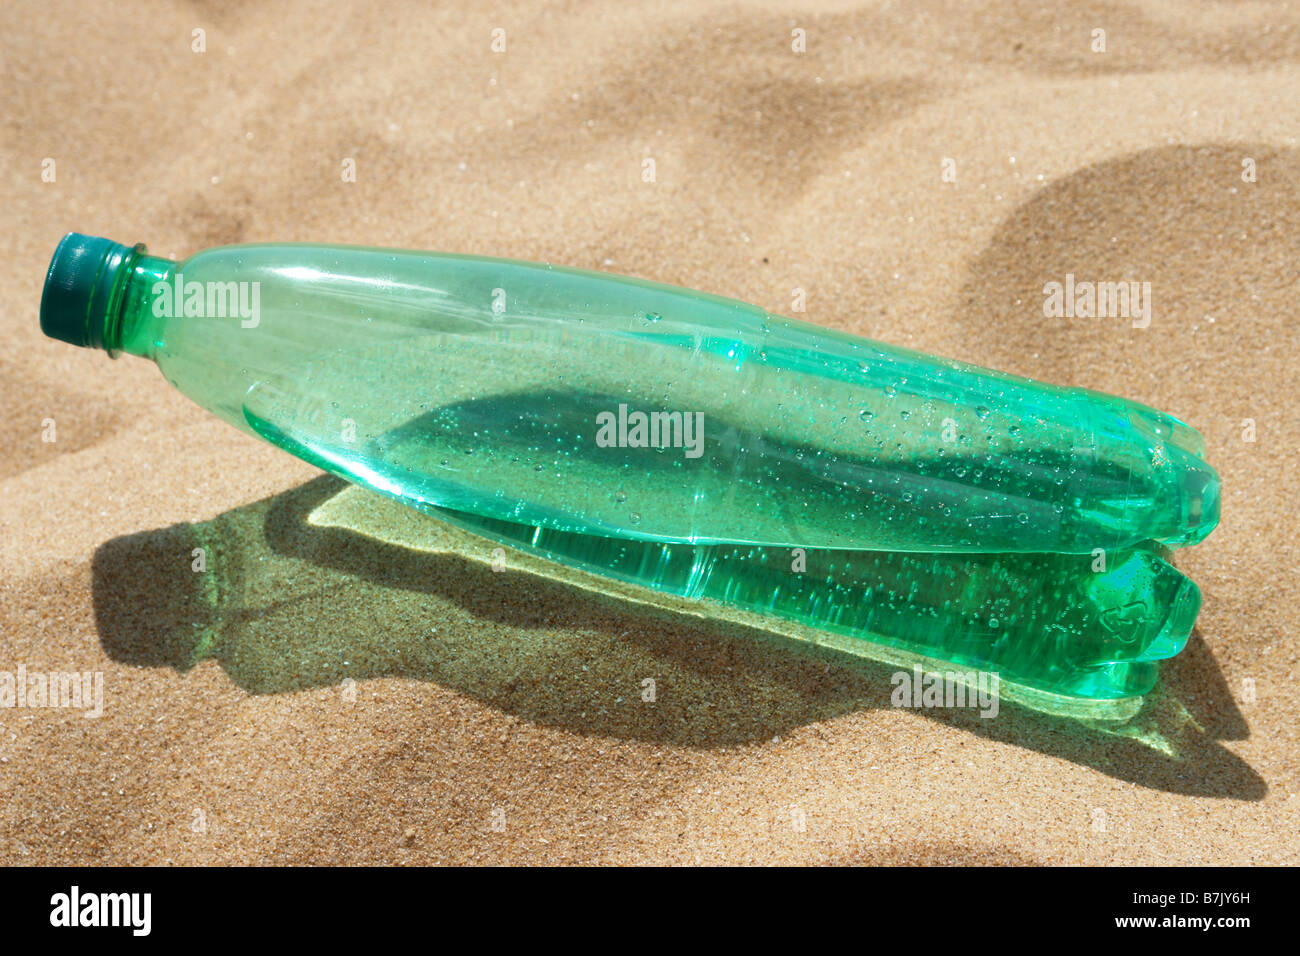 https://c8.alamy.com/comp/B7JY6H/water-bottle-at-the-beach-B7JY6H.jpg